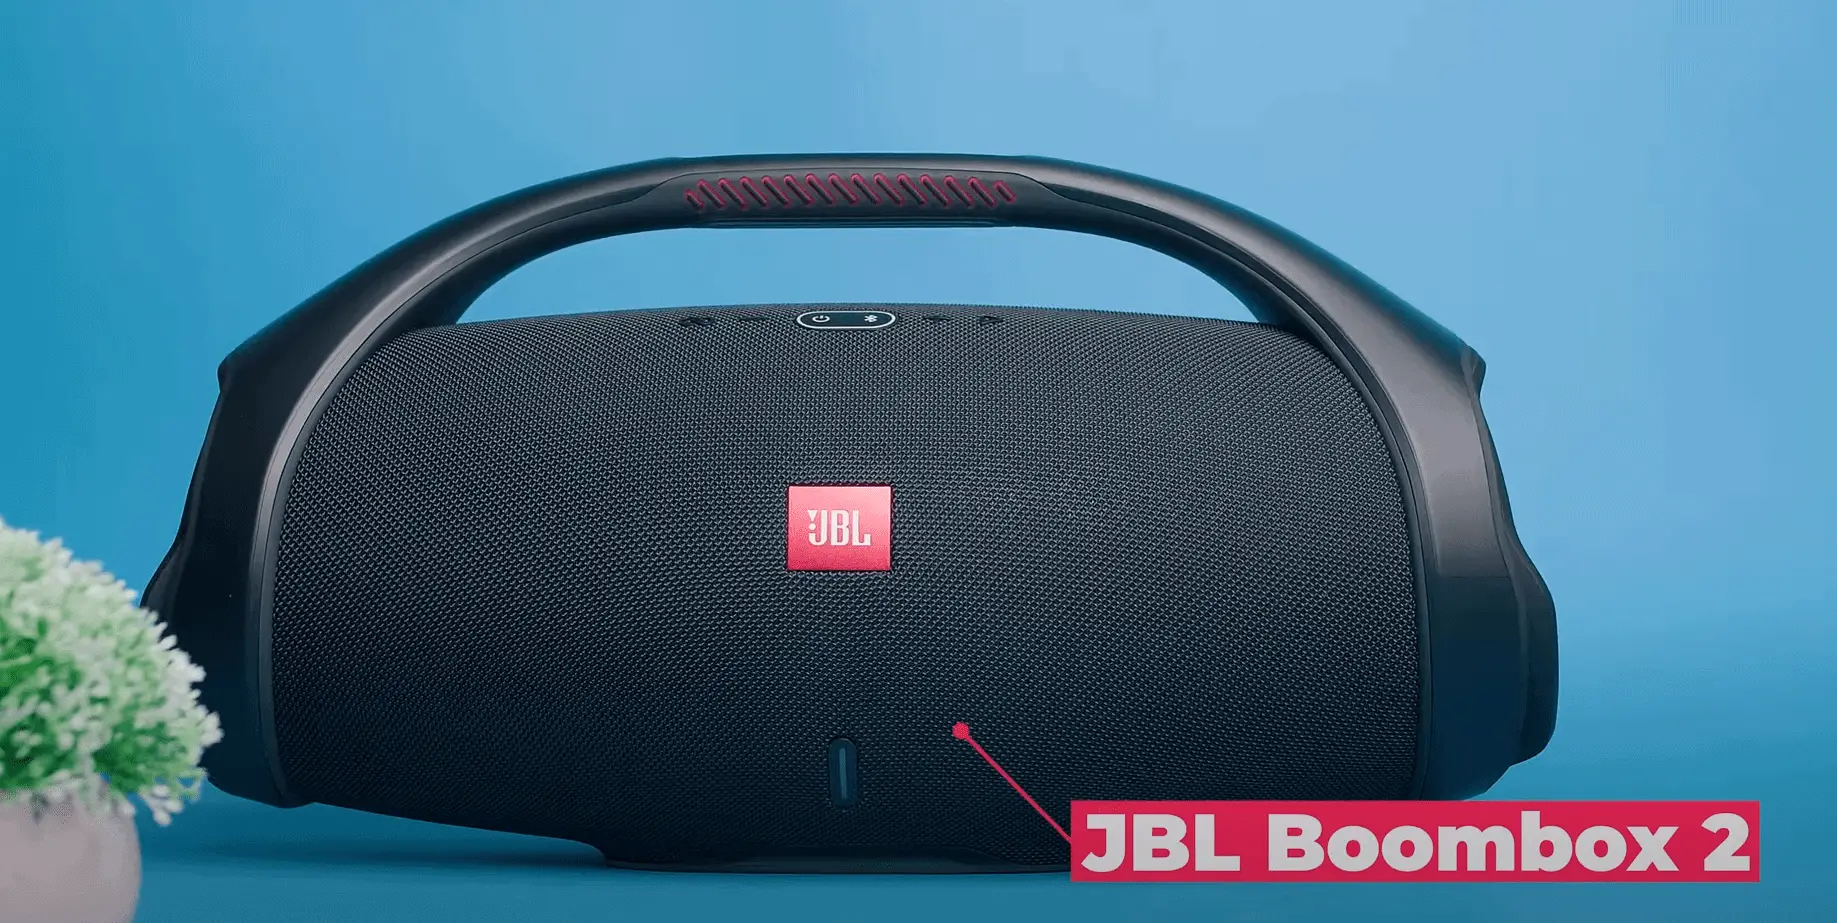 The JBL Boombox 2 speaker